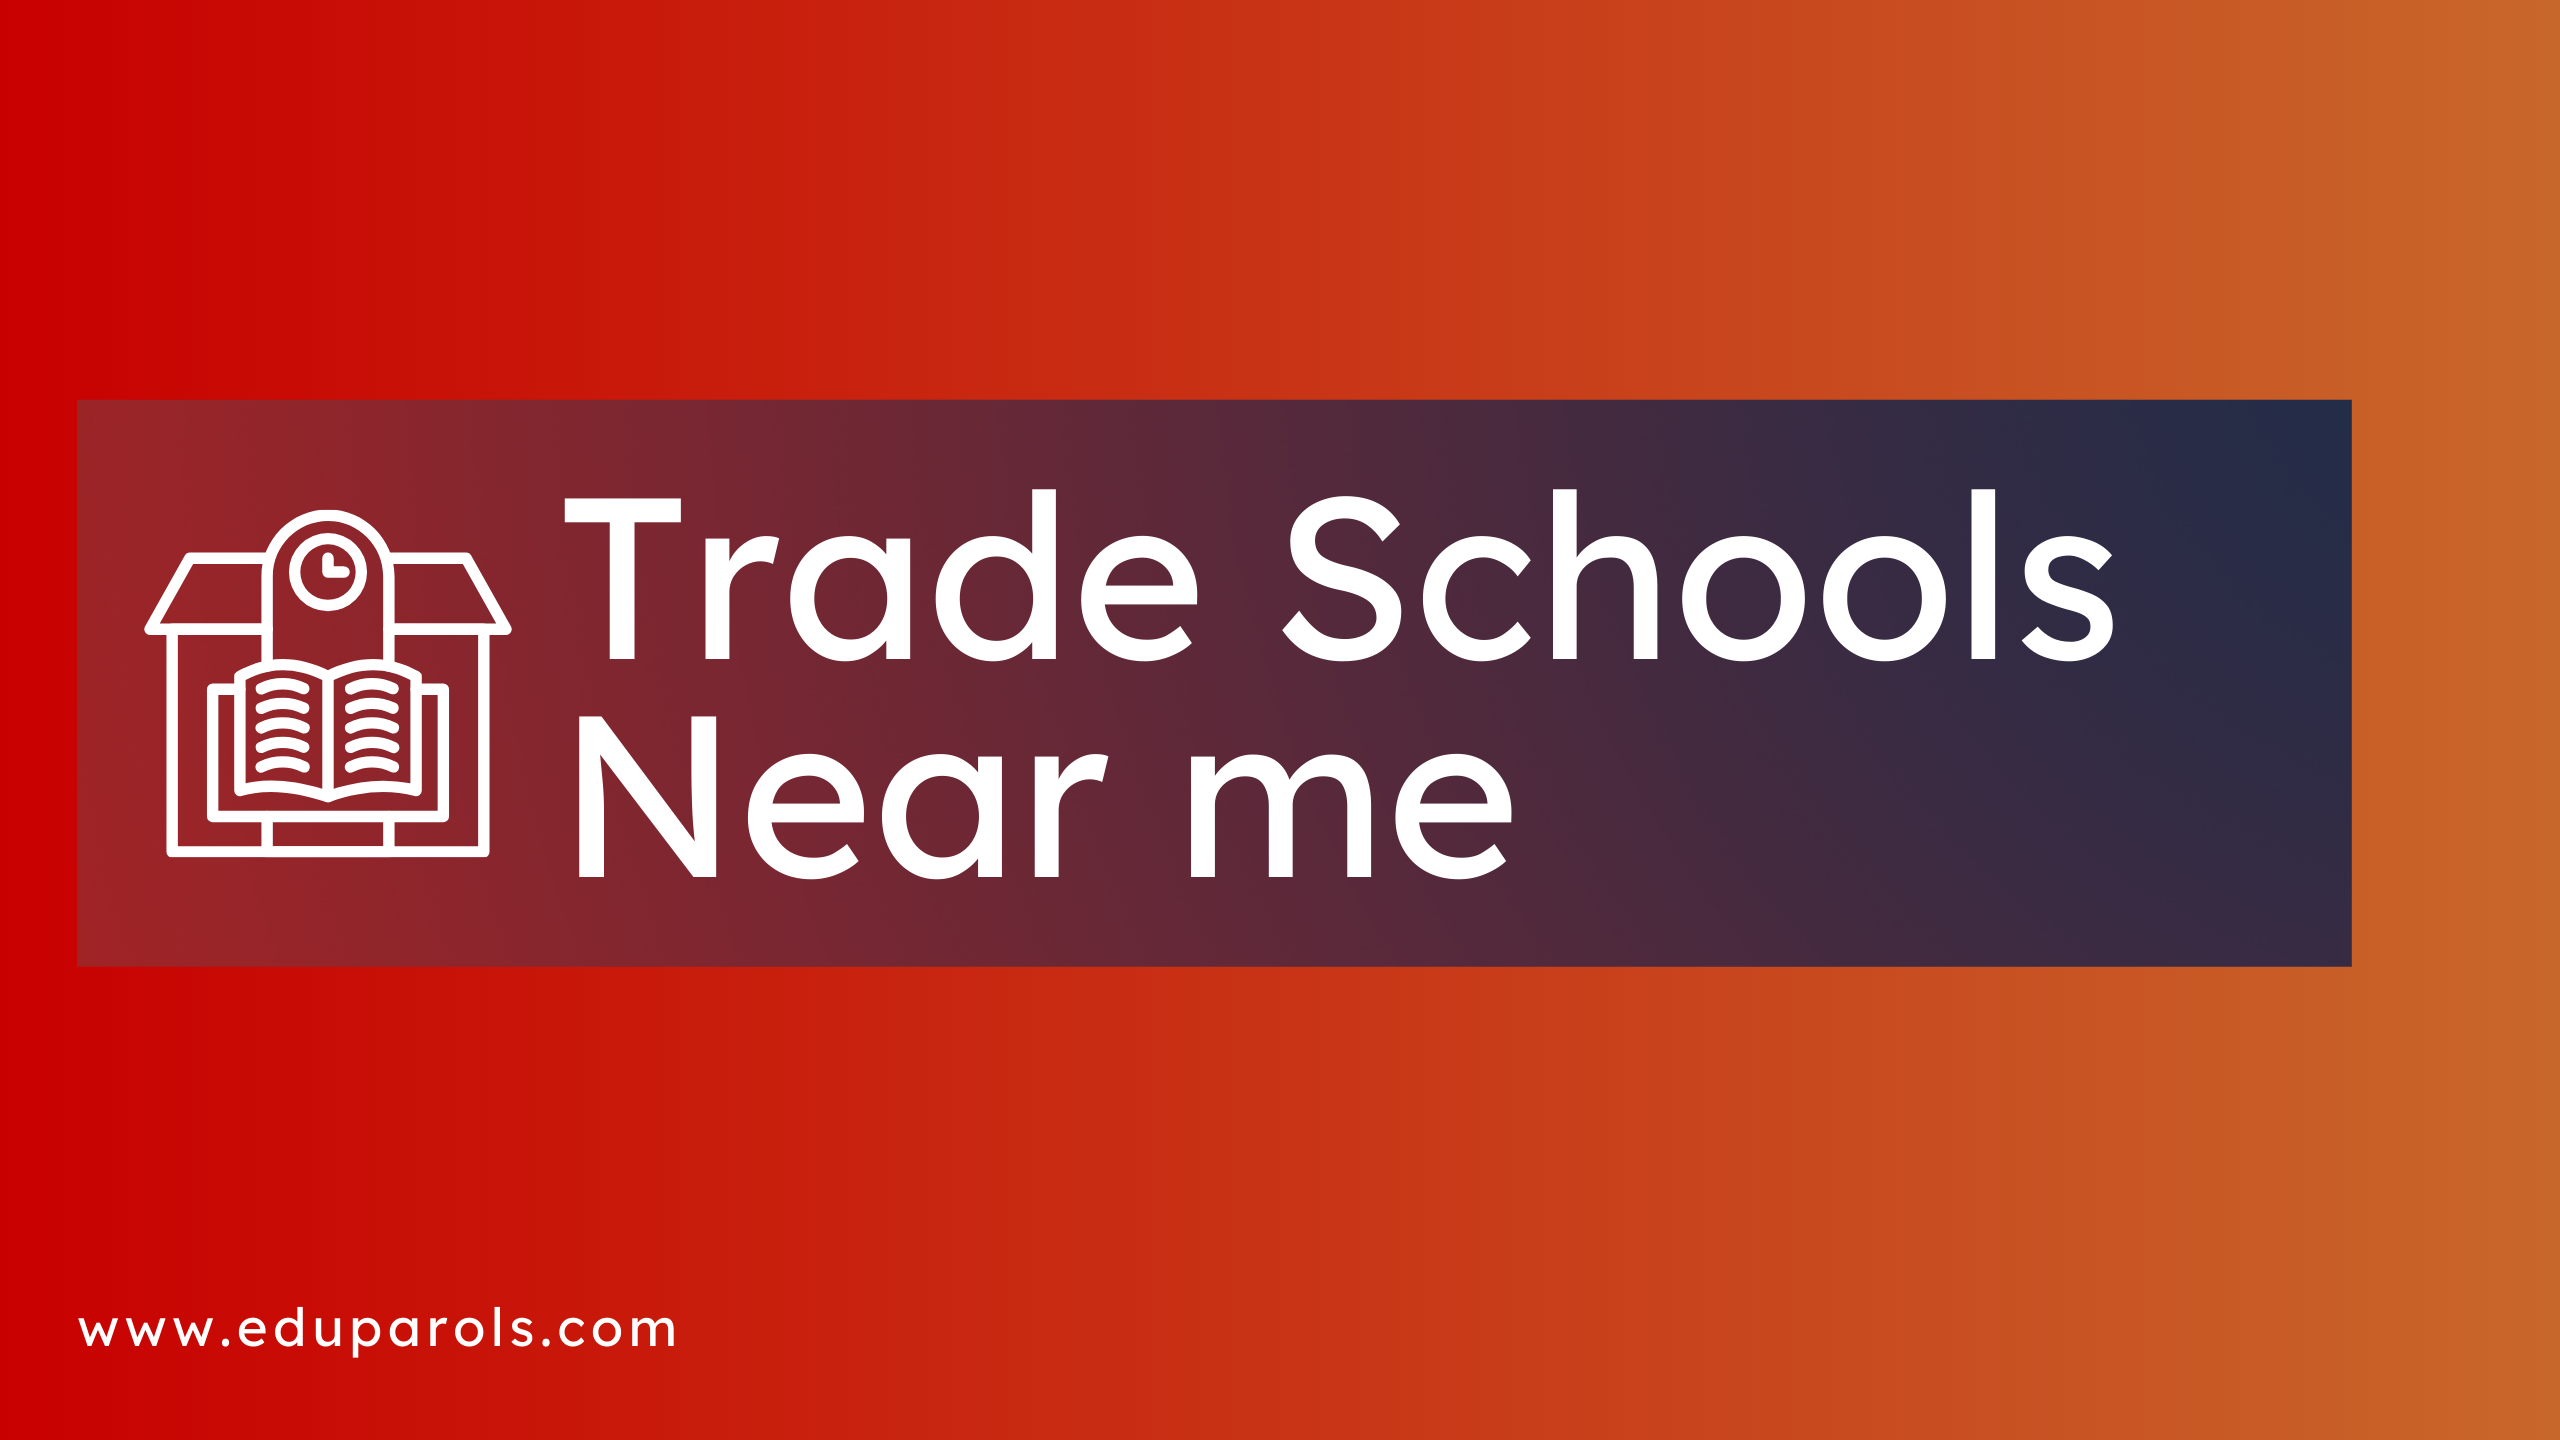 Trade Schools Near me